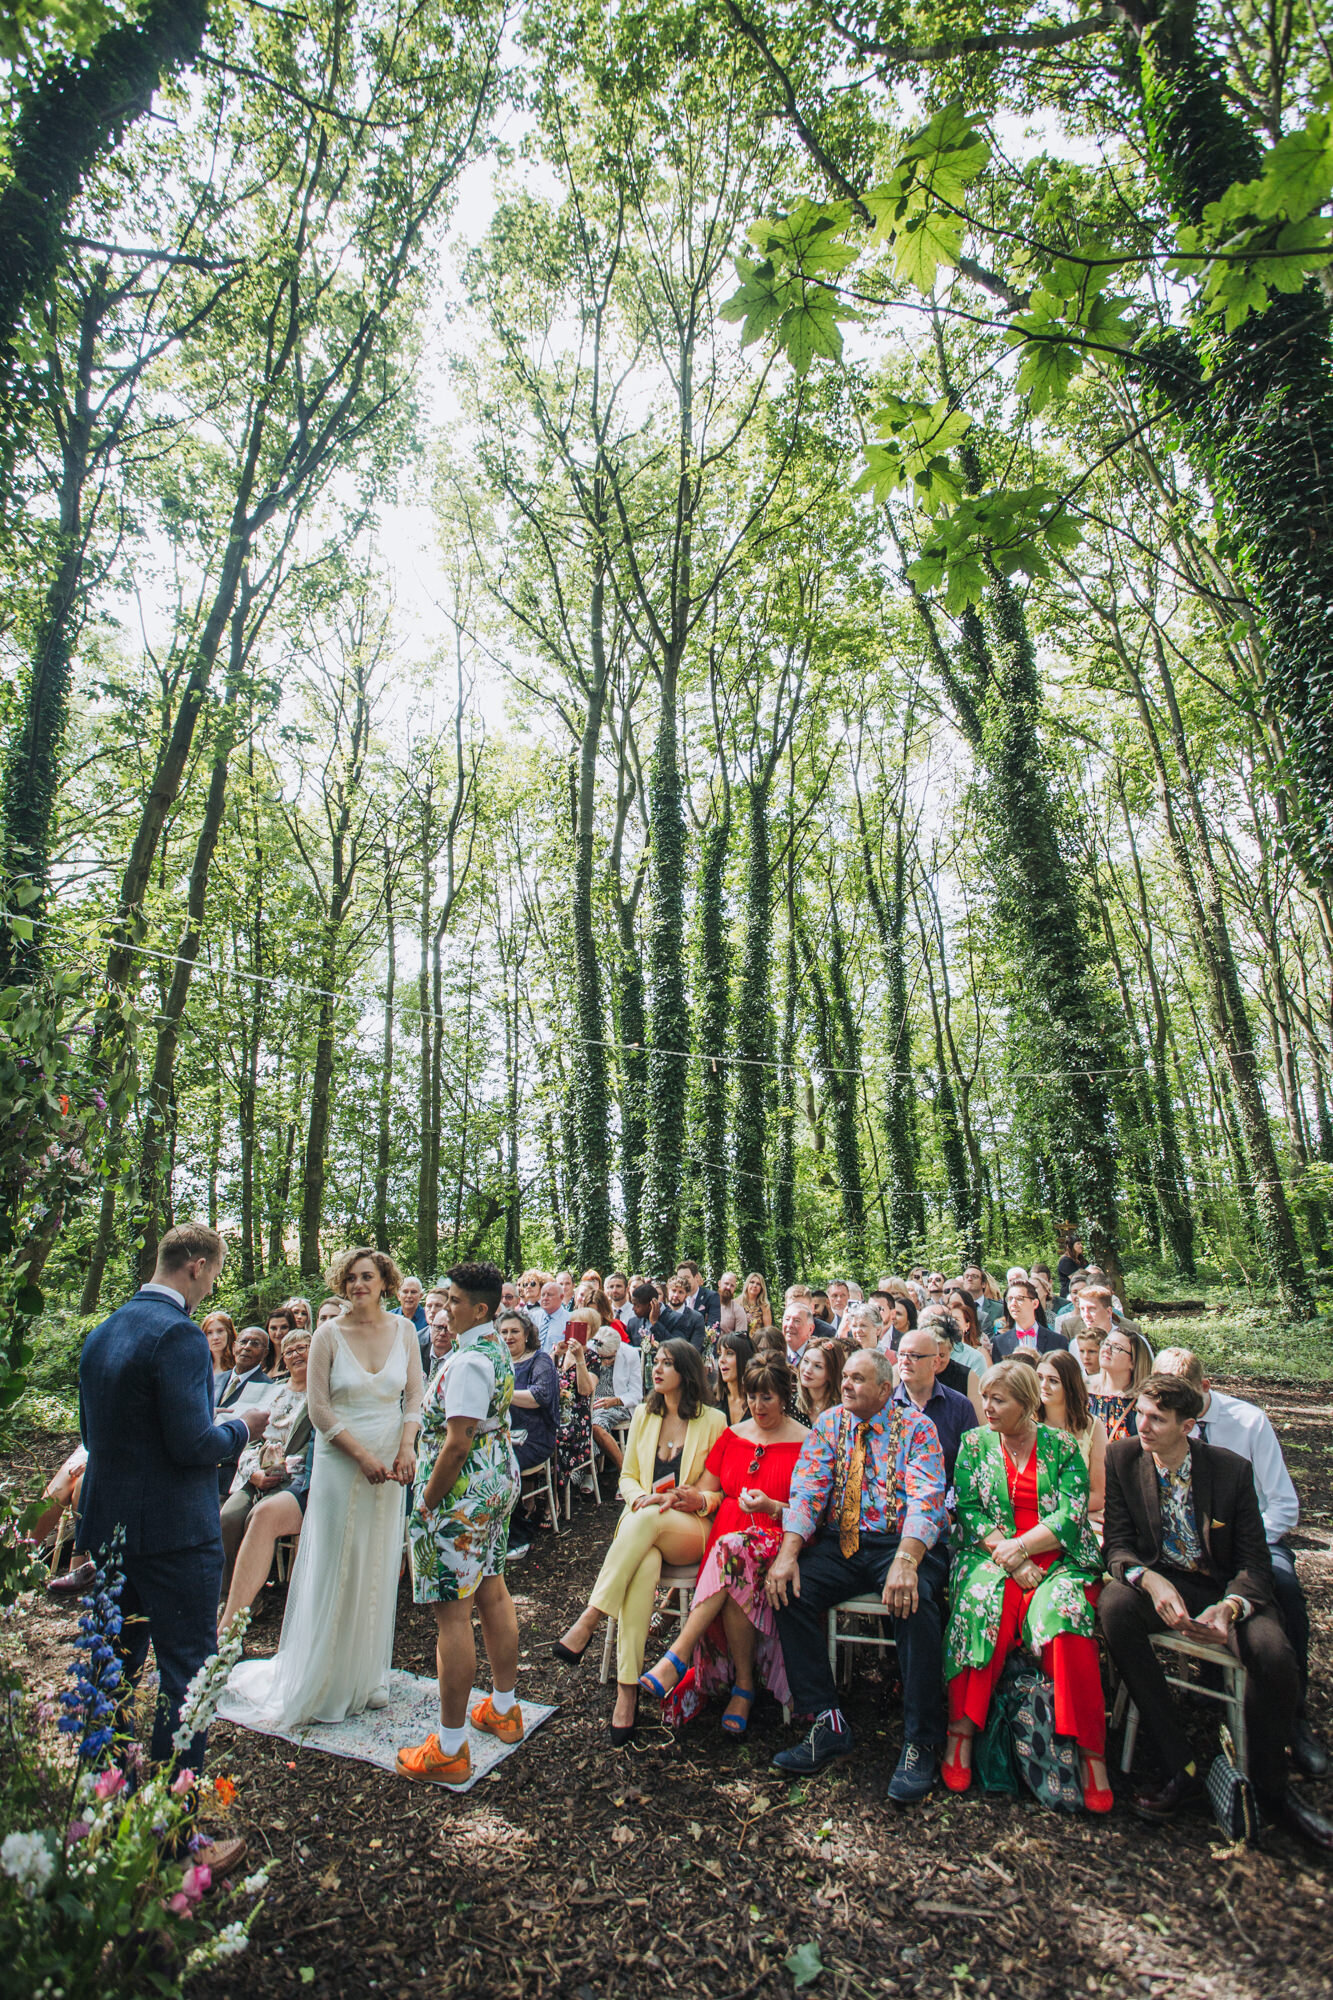 Unique wedding photographer Leeds